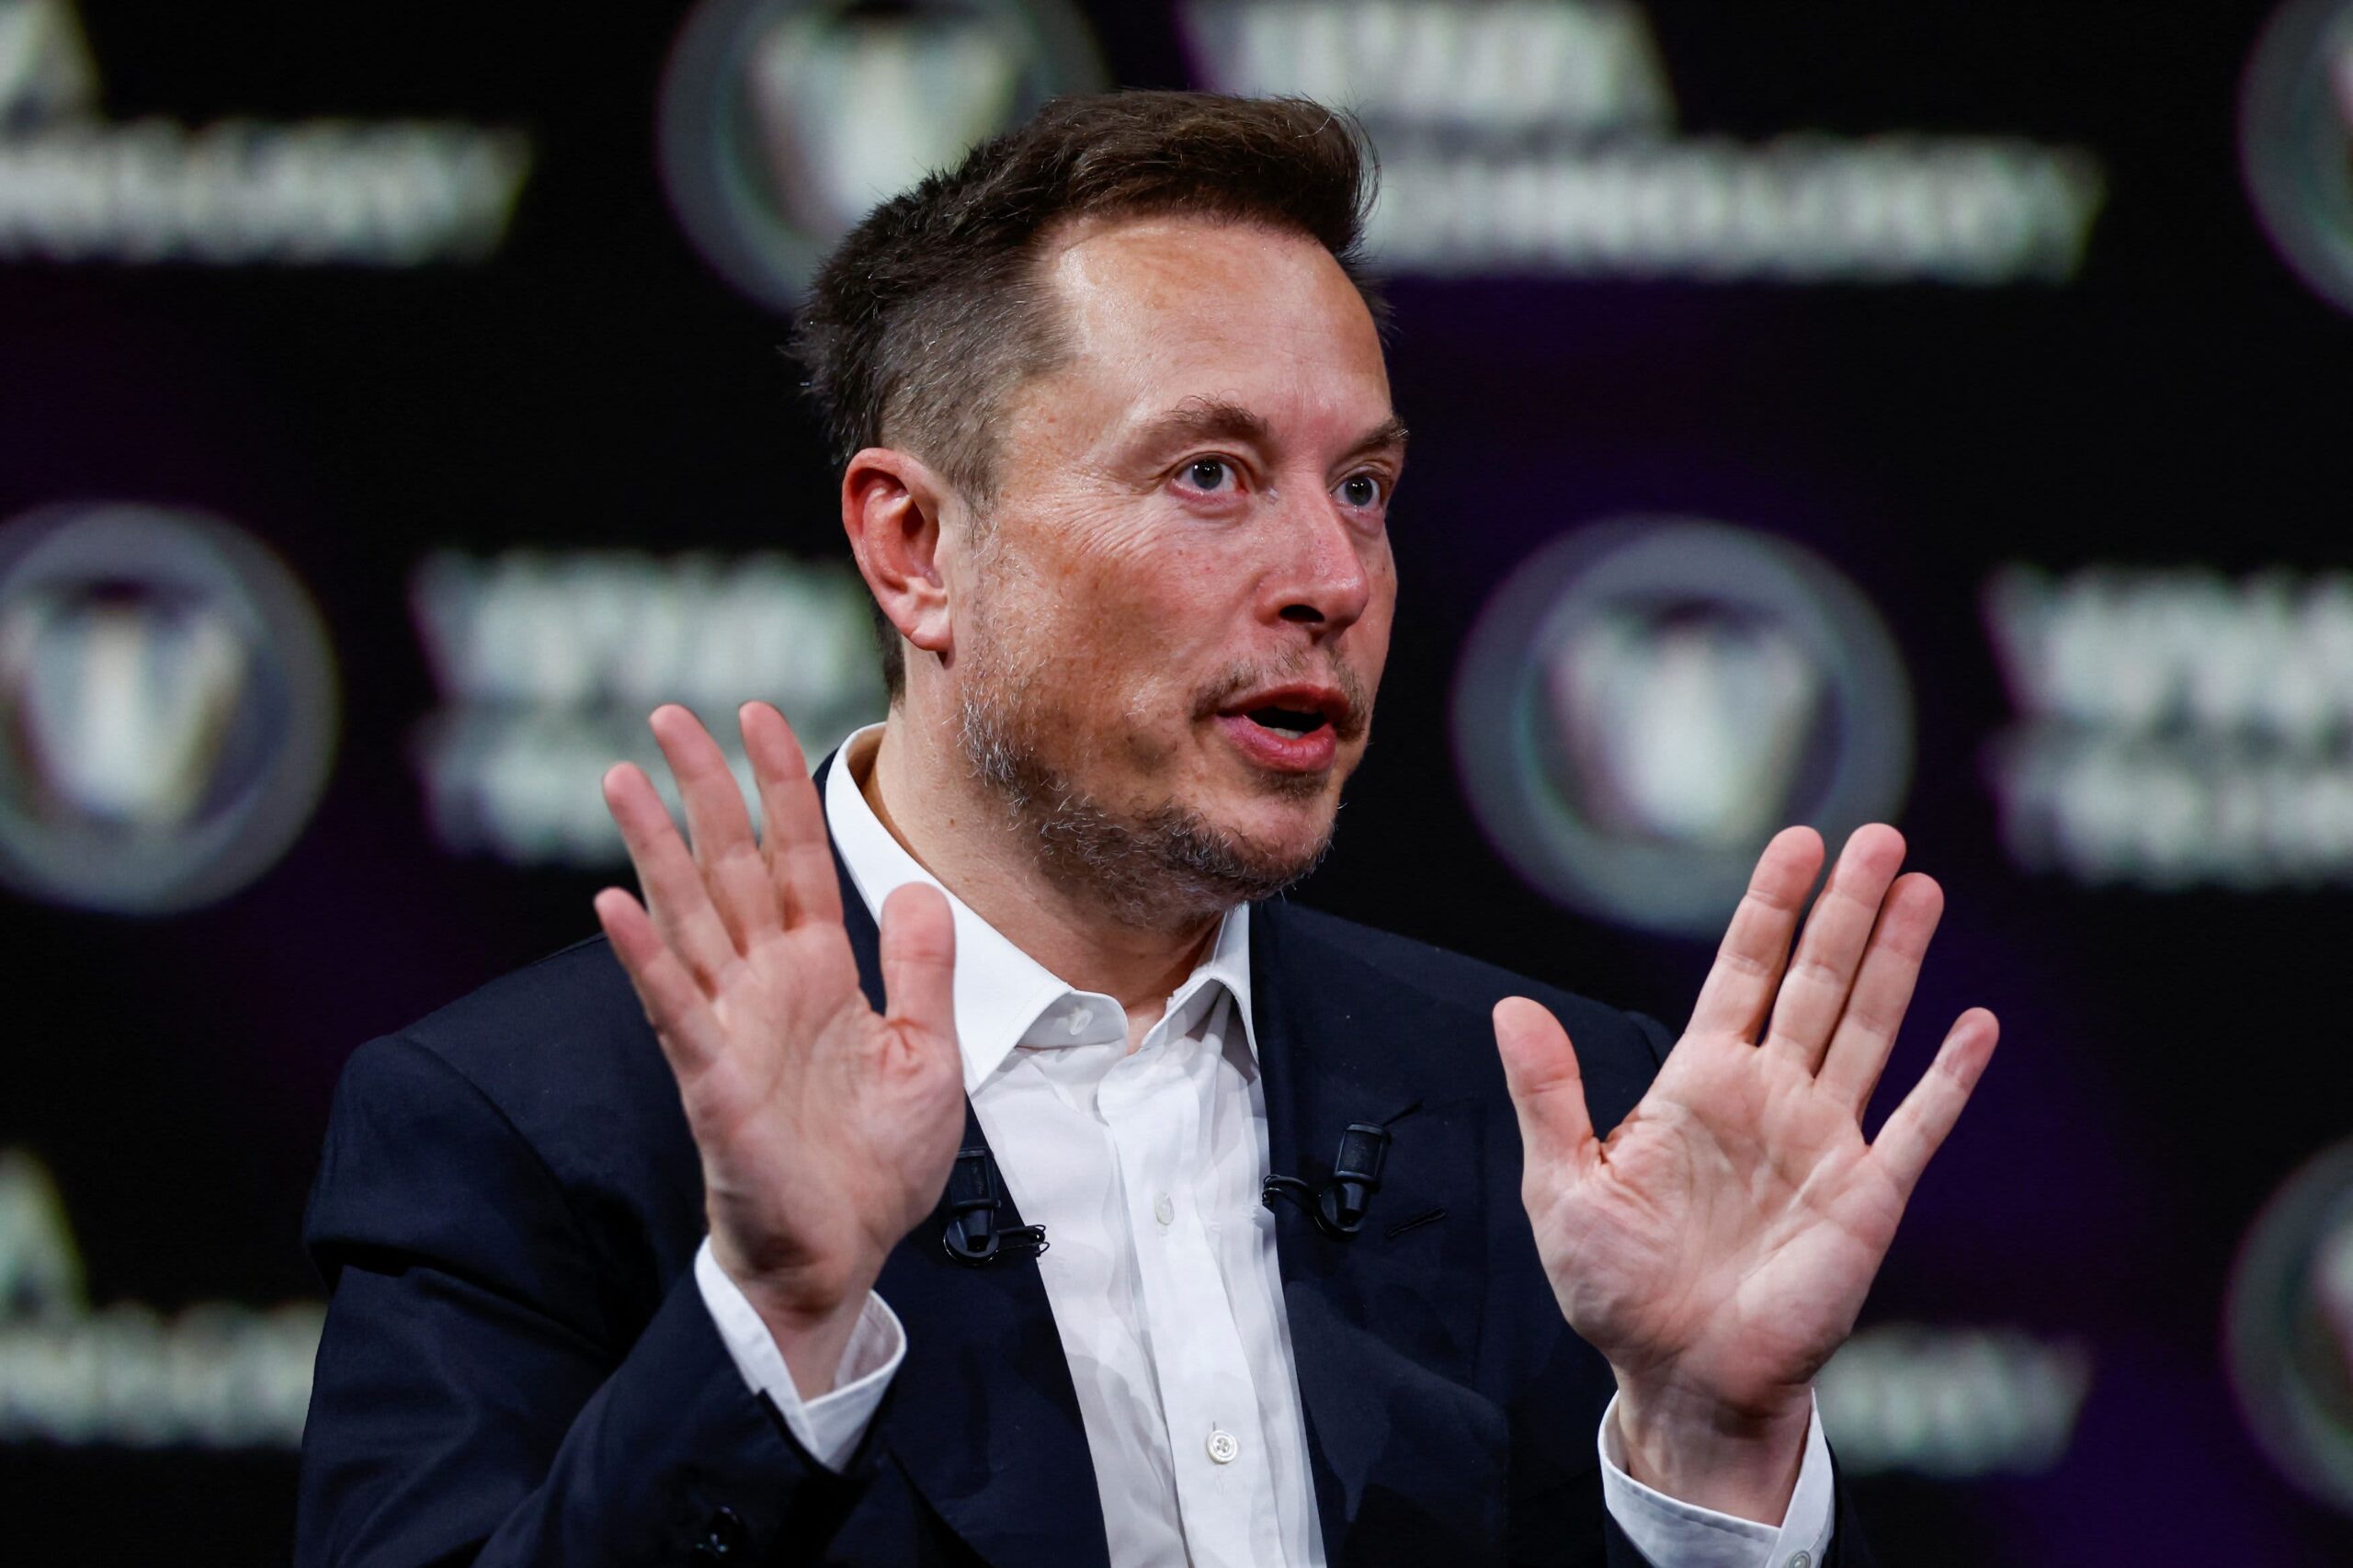 Tesla's Big Fix: Elon Musk Corrects Severance Errors as Company Eyes New Growth Phase